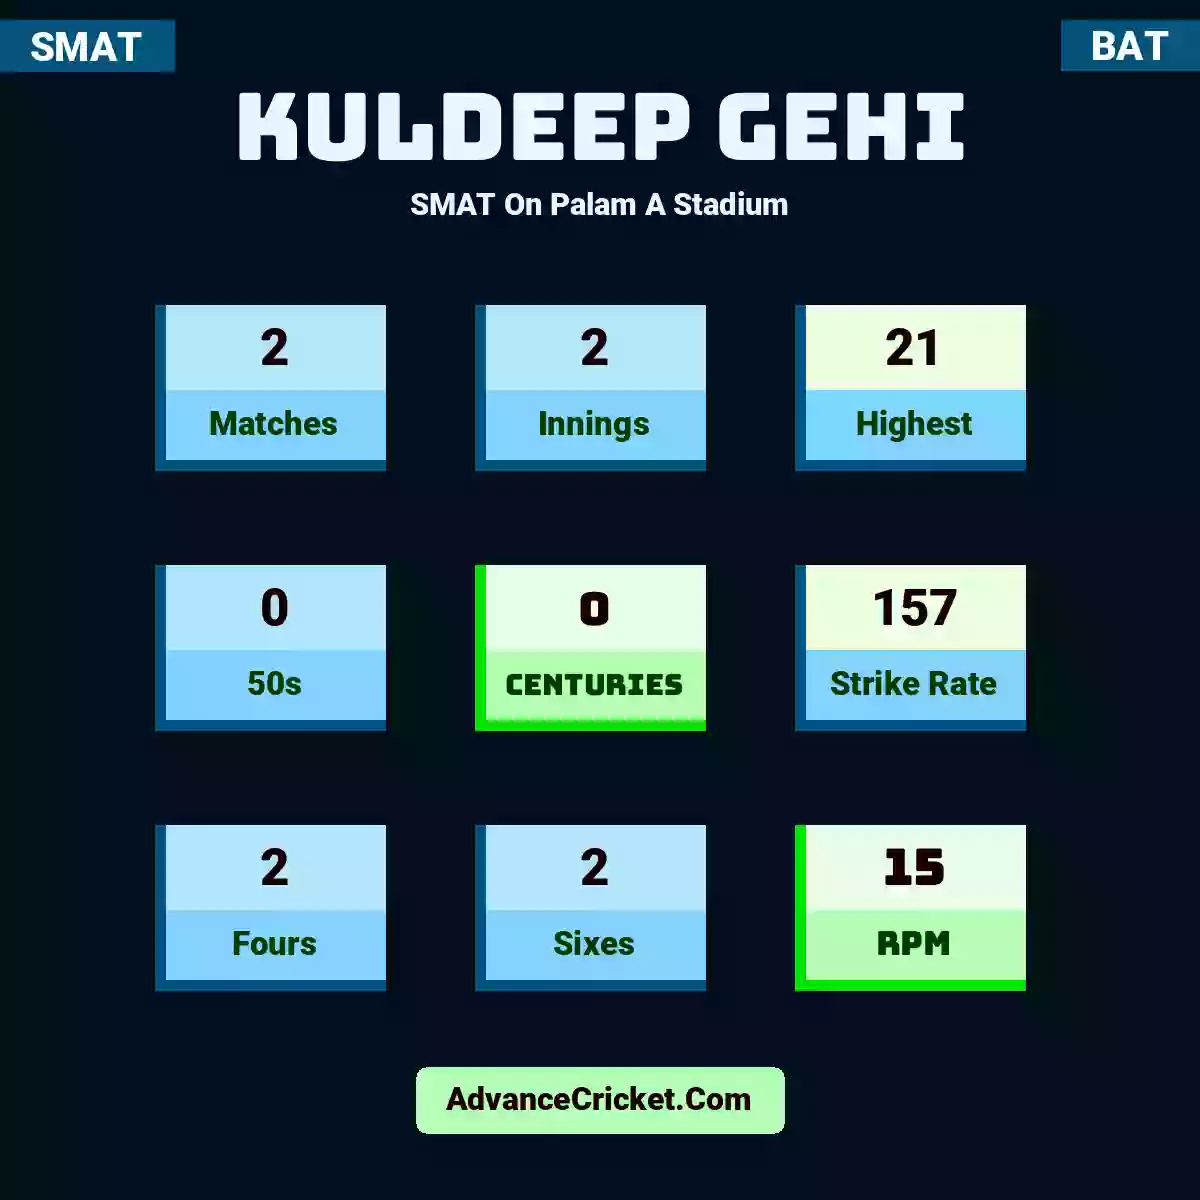 Kuldeep Gehi SMAT  On Palam A Stadium, Kuldeep Gehi played 2 matches, scored 21 runs as highest, 0 half-centuries, and 0 centuries, with a strike rate of 157. K.Gehi hit 2 fours and 2 sixes, with an RPM of 15.